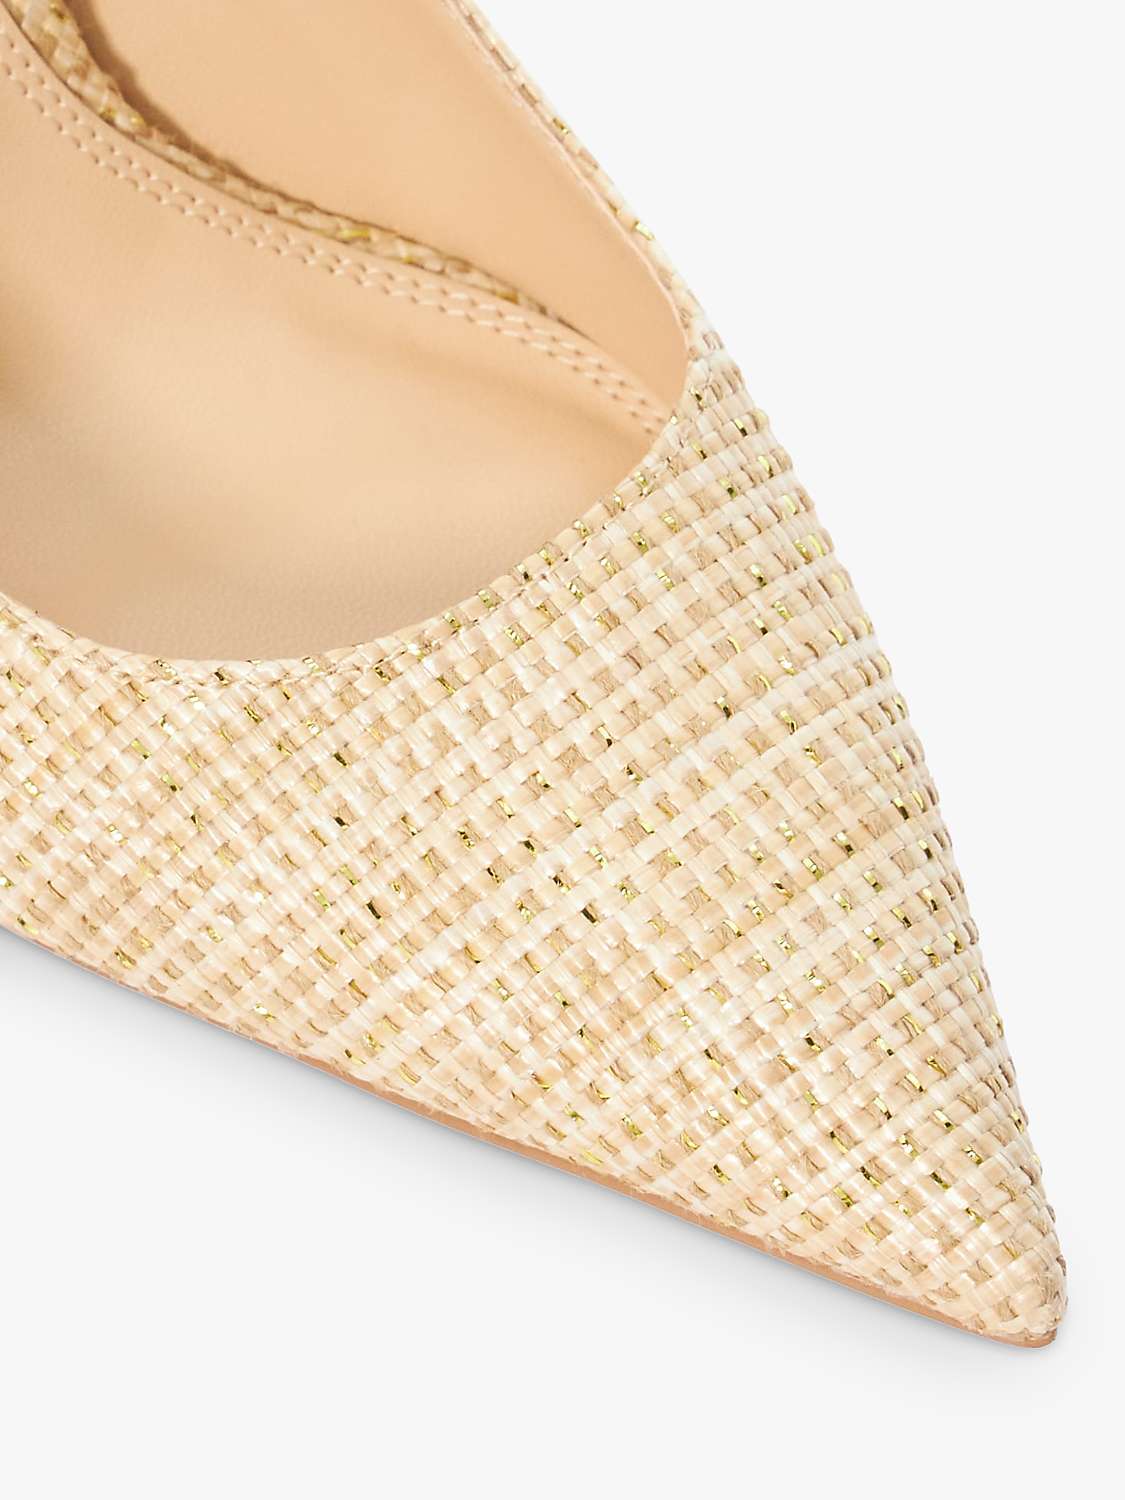 Buy Dune Atlanta Raffia Look High Heel Court Shoes, Natural Online at johnlewis.com